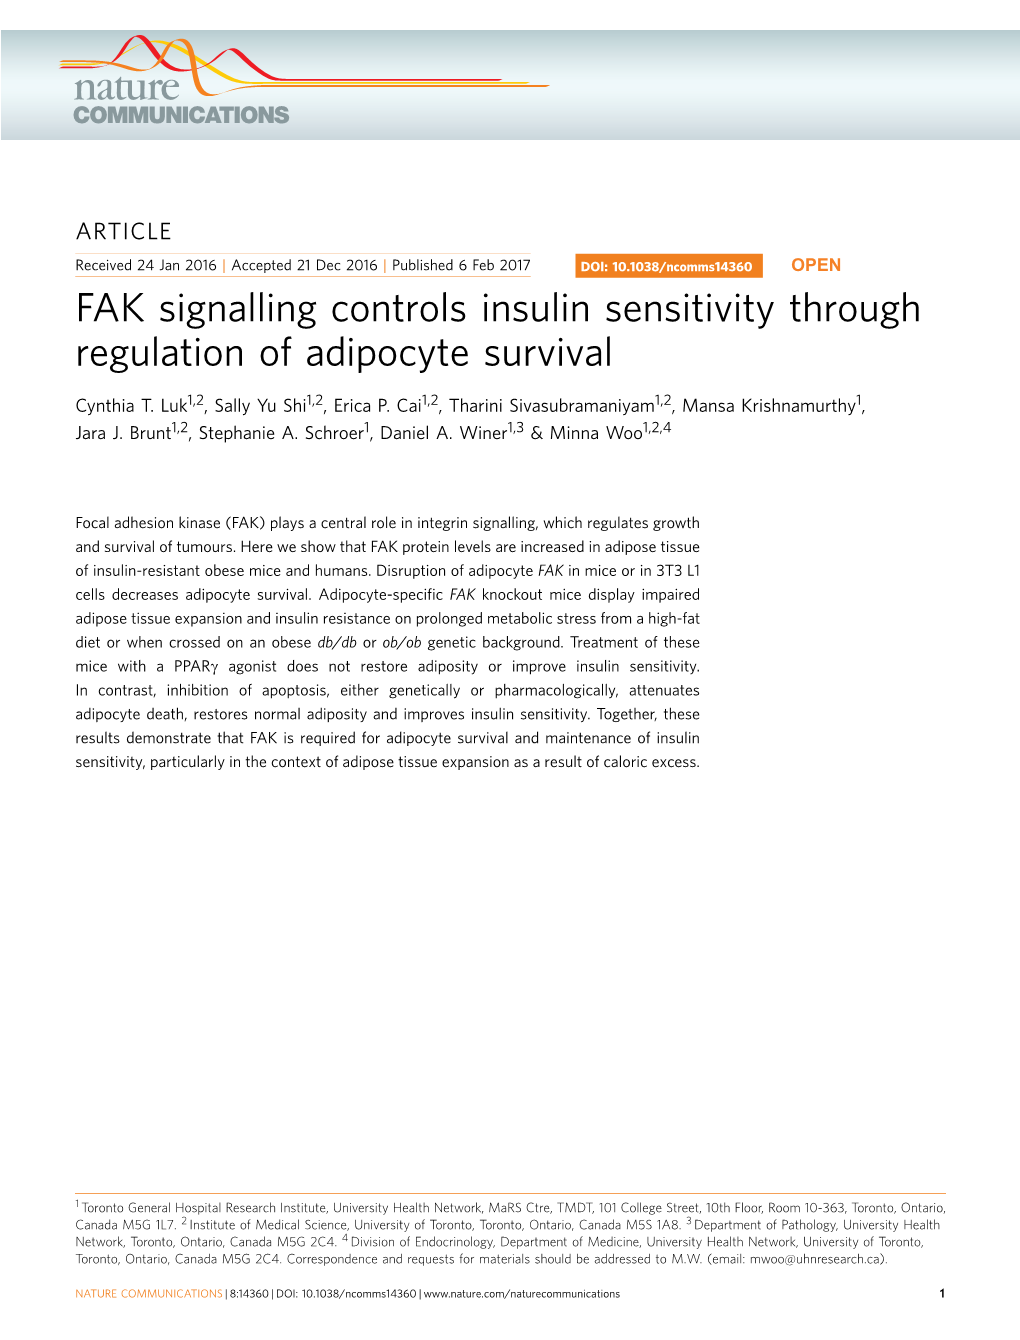 FAK Signalling Controls Insulin Sensitivity Through Regulation of Adipocyte Survival